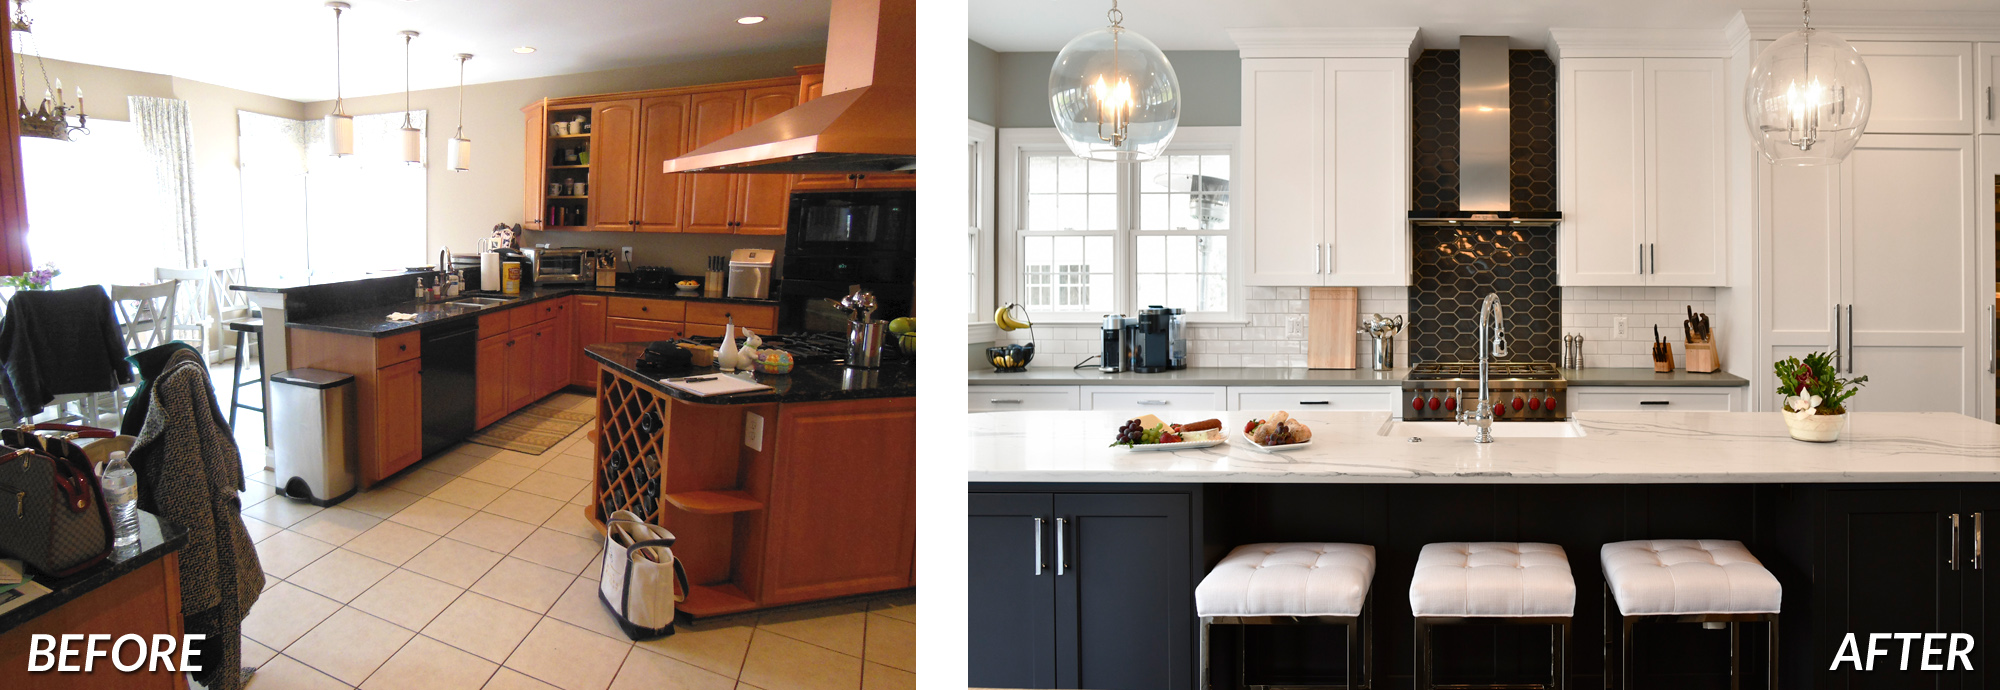 BOWA Design Build - Leesburg Kitchen Remodel Before & After